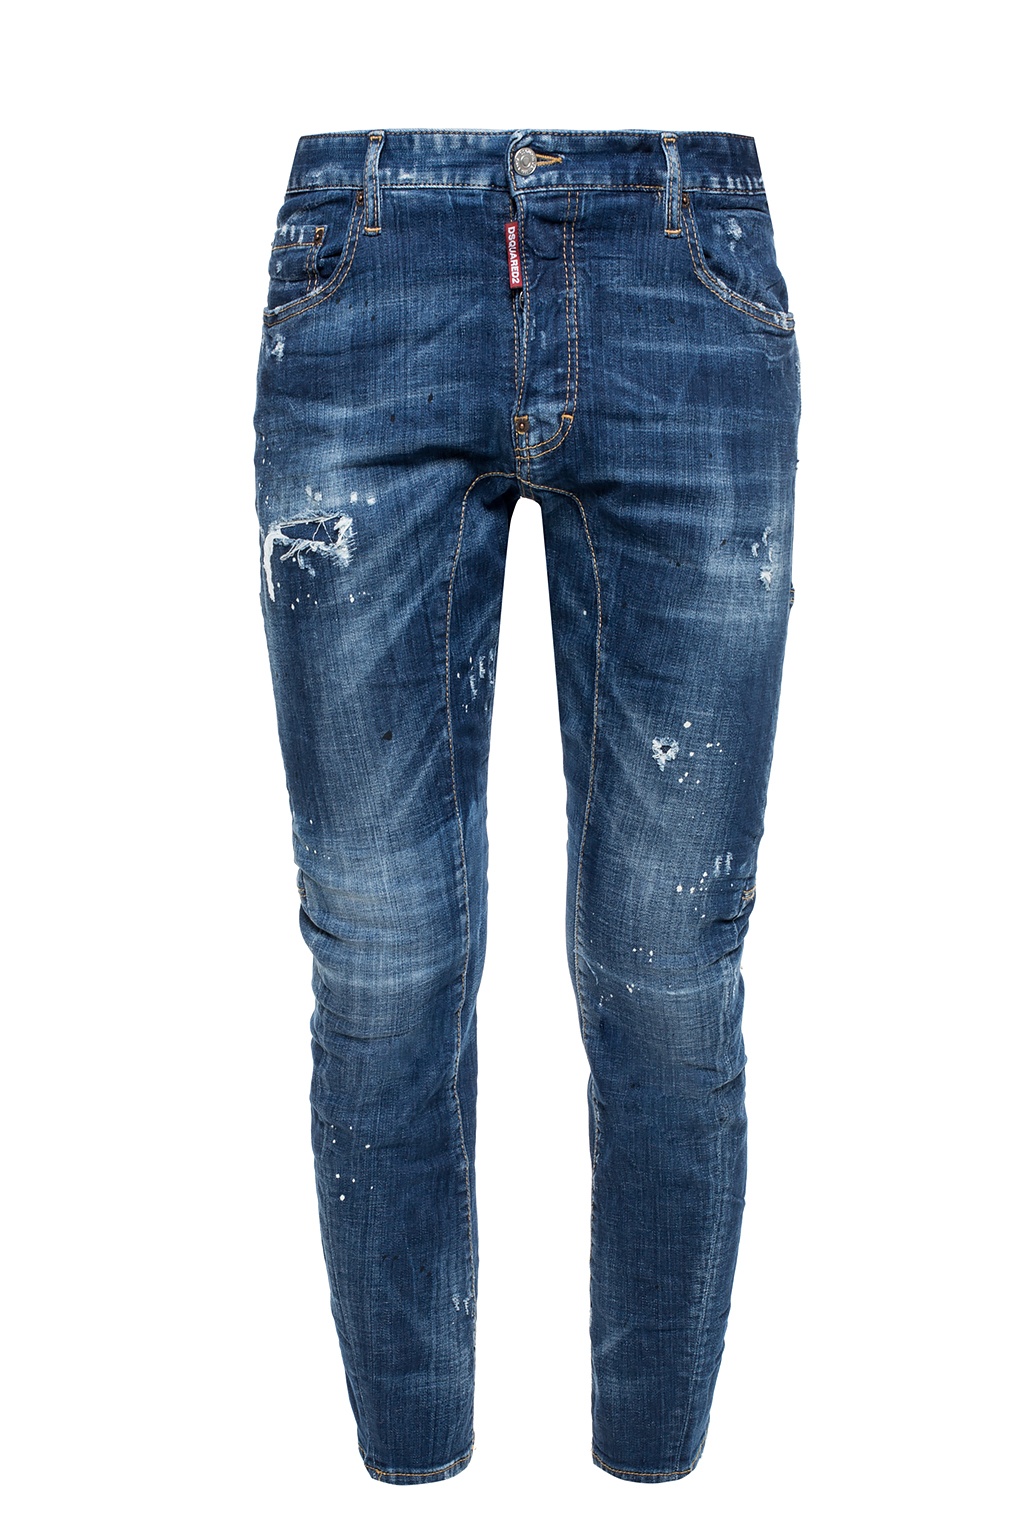 Dsquared2 'Tidy Biker Jean' stonewashed jeans | Men's Clothing